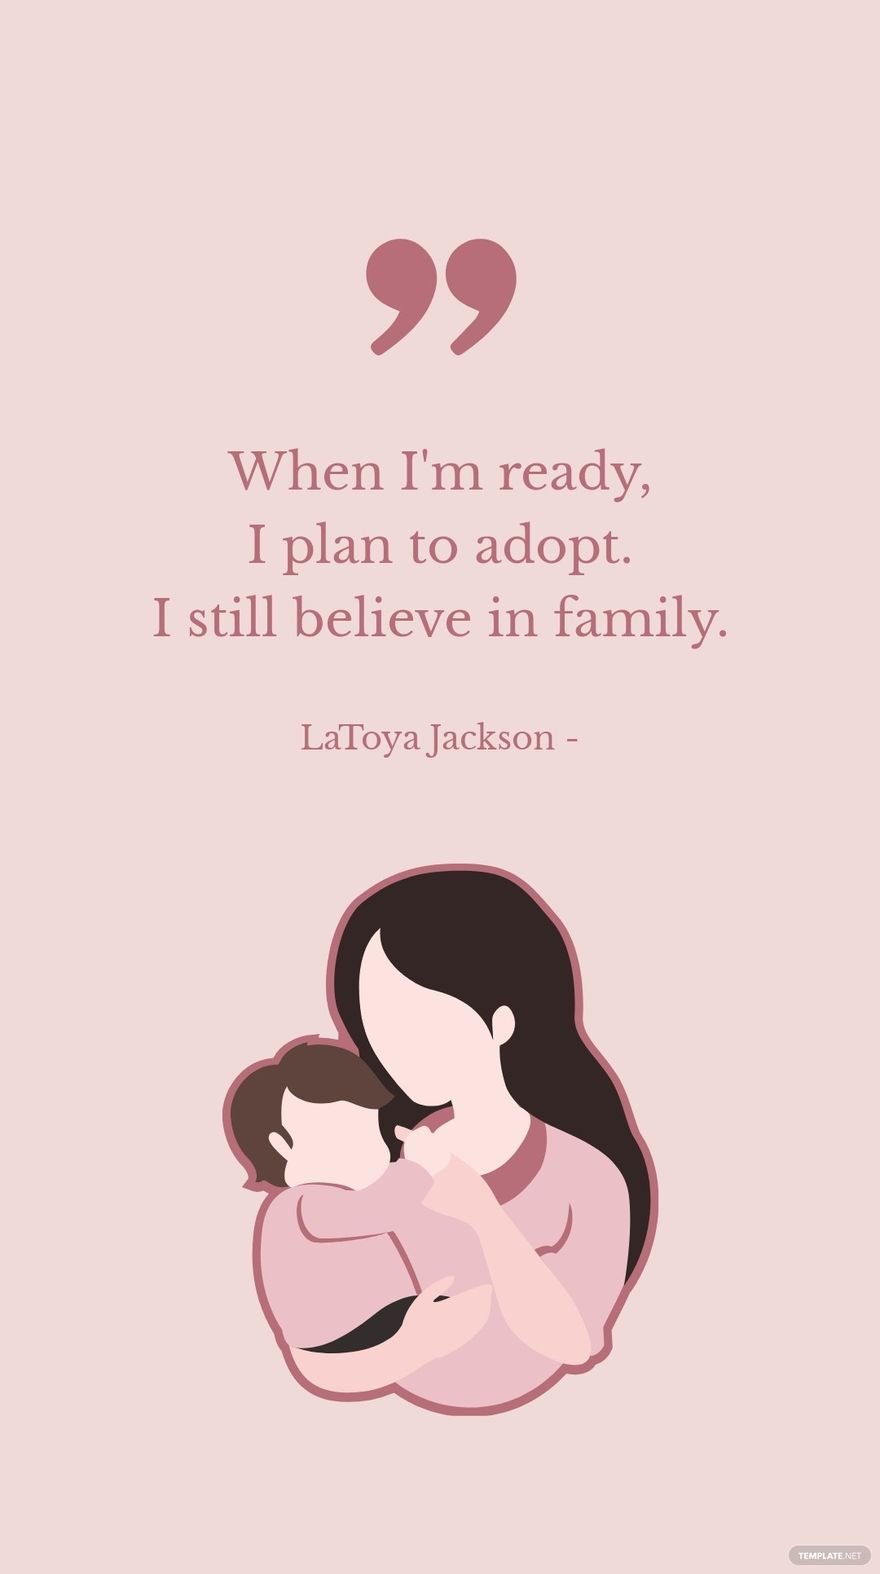 LaToya Jackson - When I'm ready, I plan to adopt. I still believe in family.